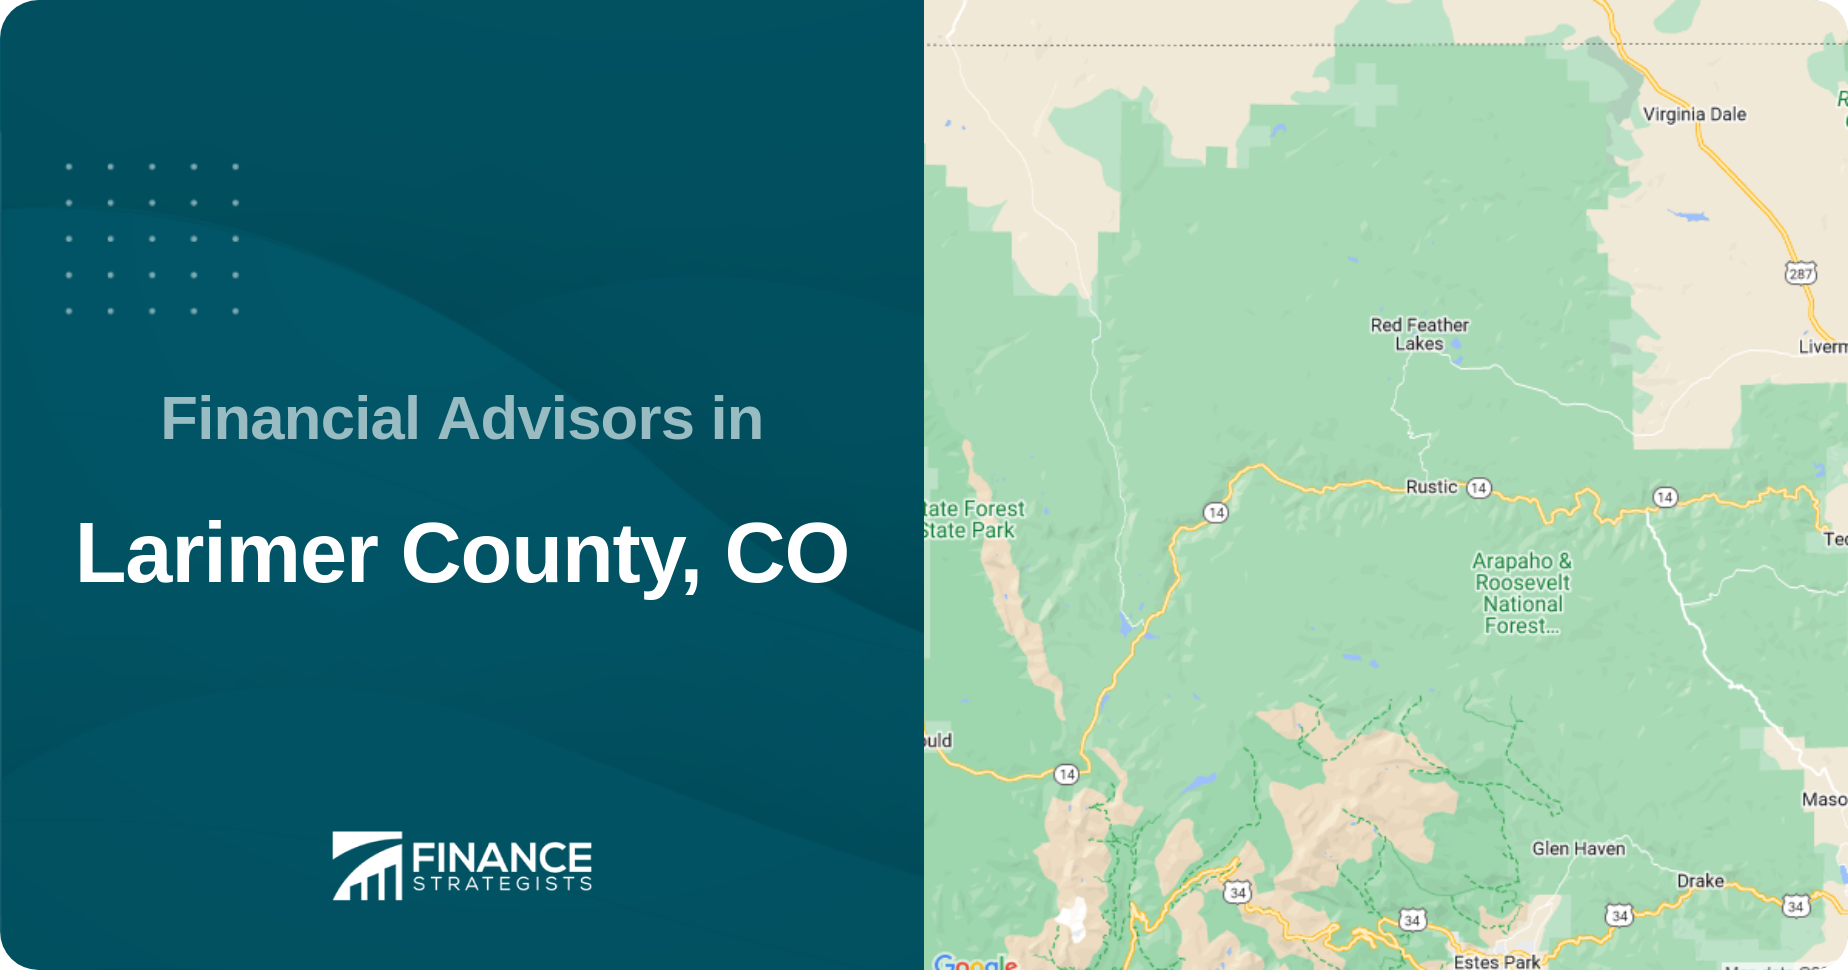 Financial Advisors in Larimer County, CO